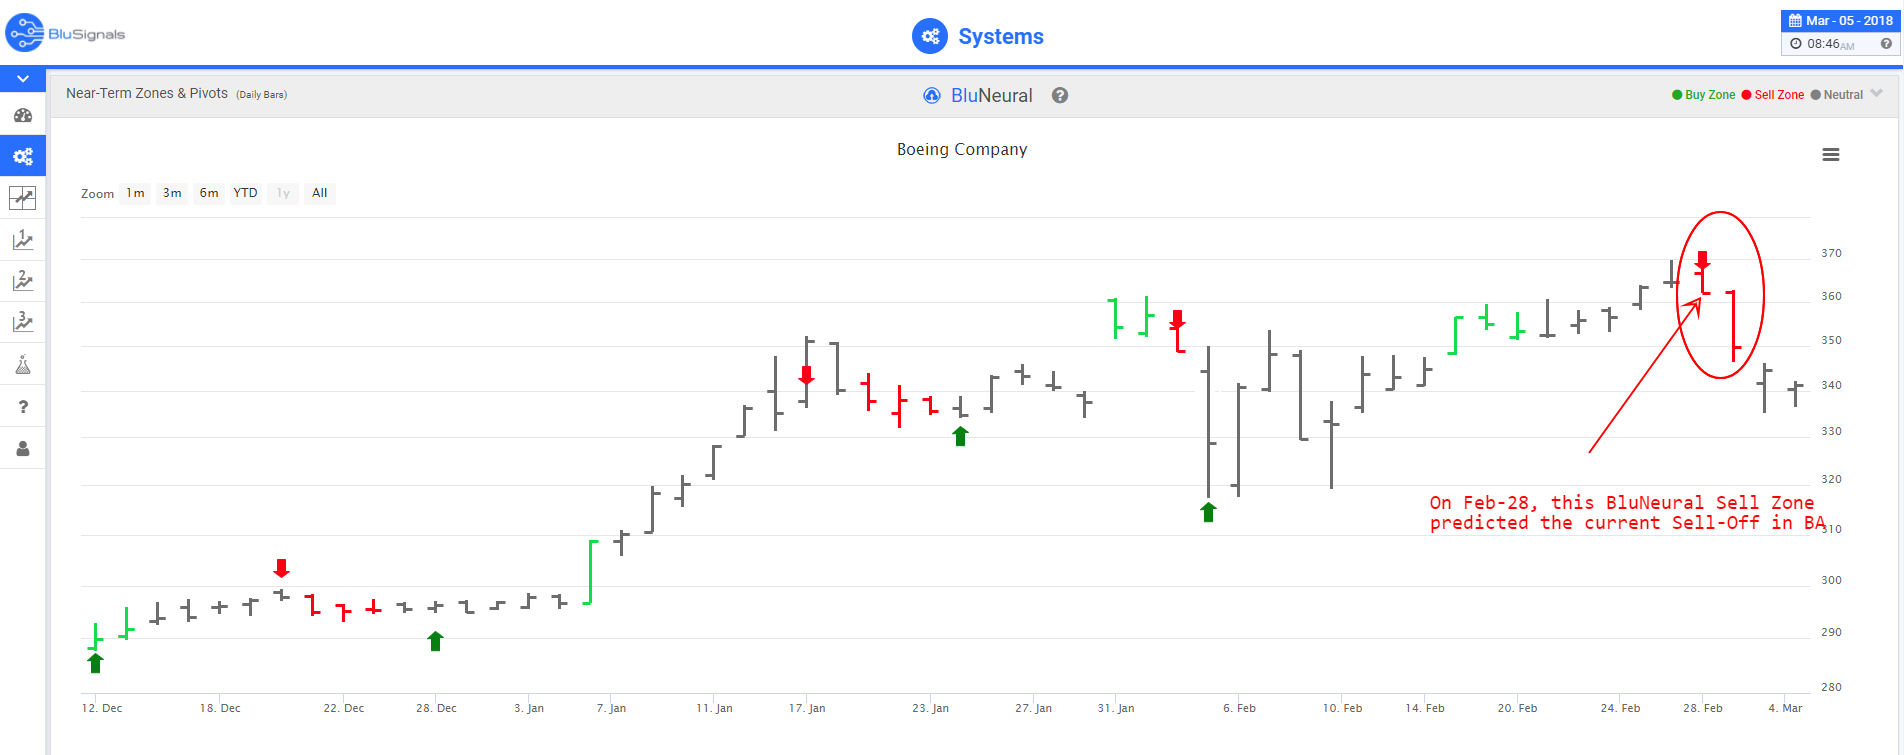 BA stock trading signals